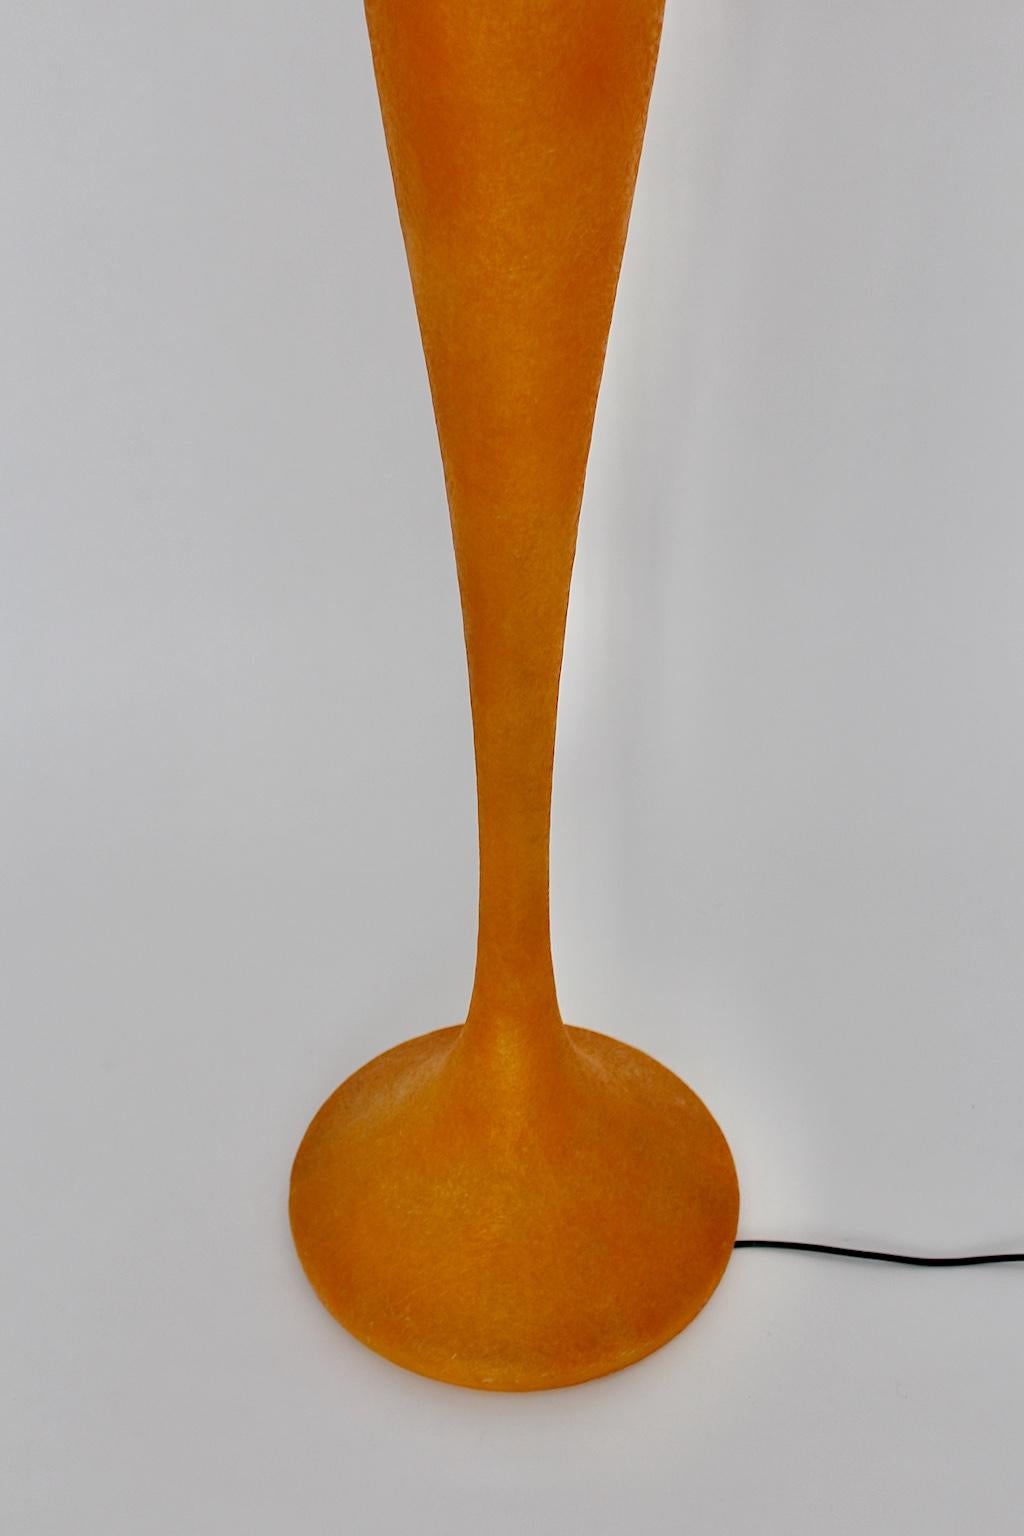 Fiberglass Modern Orange Vintage Guglielmo Berchicci E.T.A. Floor Lamp for Kundalini, Italy For Sale